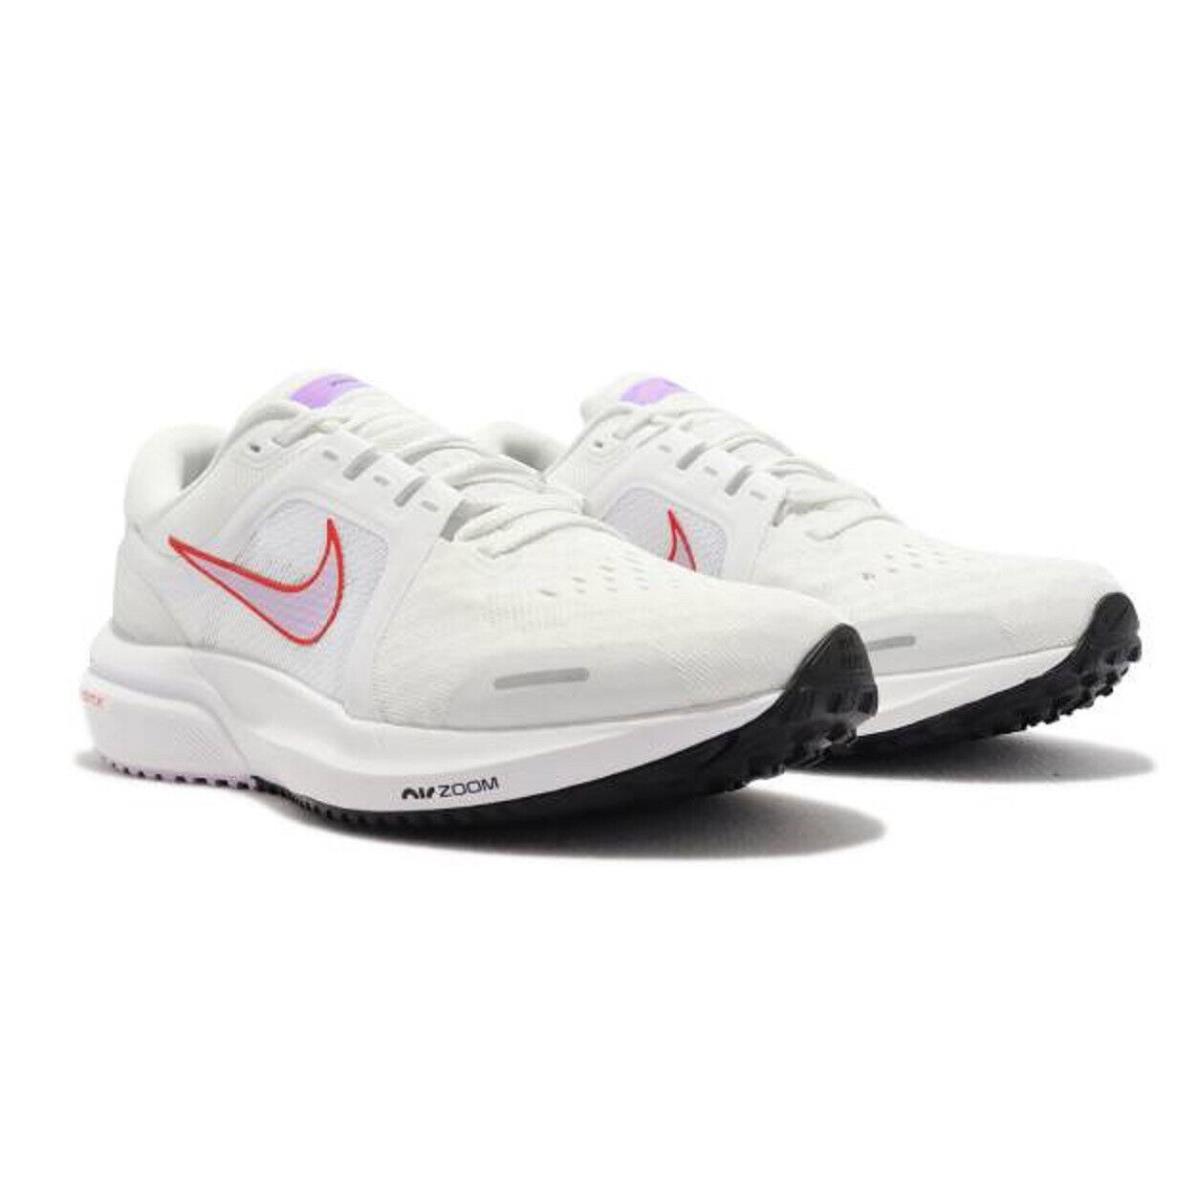 Nike Air Zoom Vomero 16 Womens Road Running Shoes Summit White DA7698-102 Sz 8.5 - White